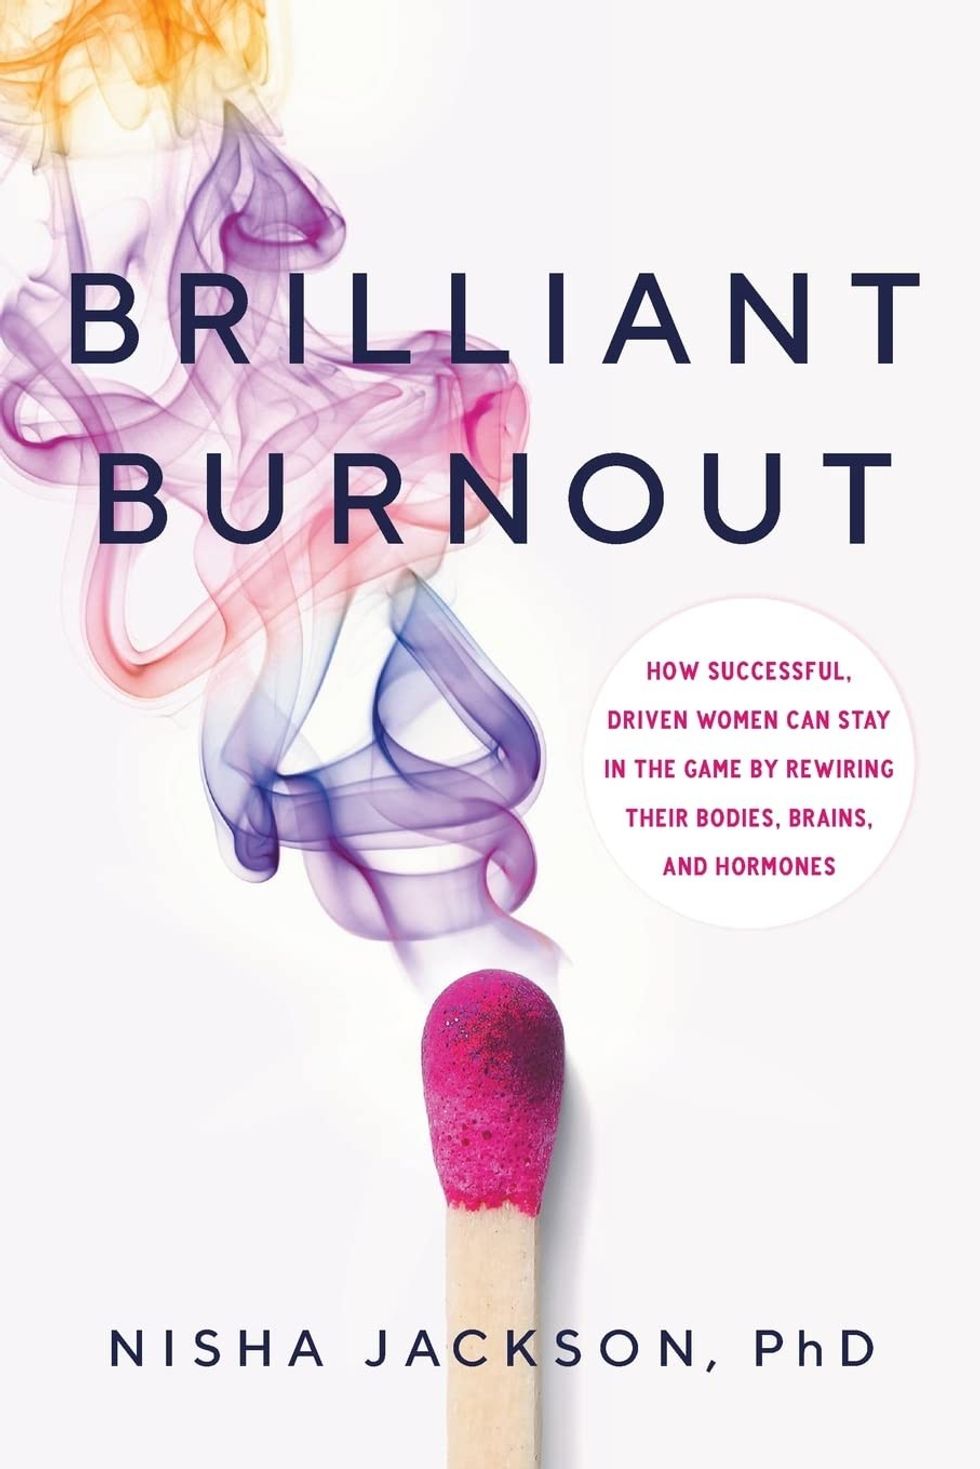 Brilliant Burnout by Nisha Jackson, PhD